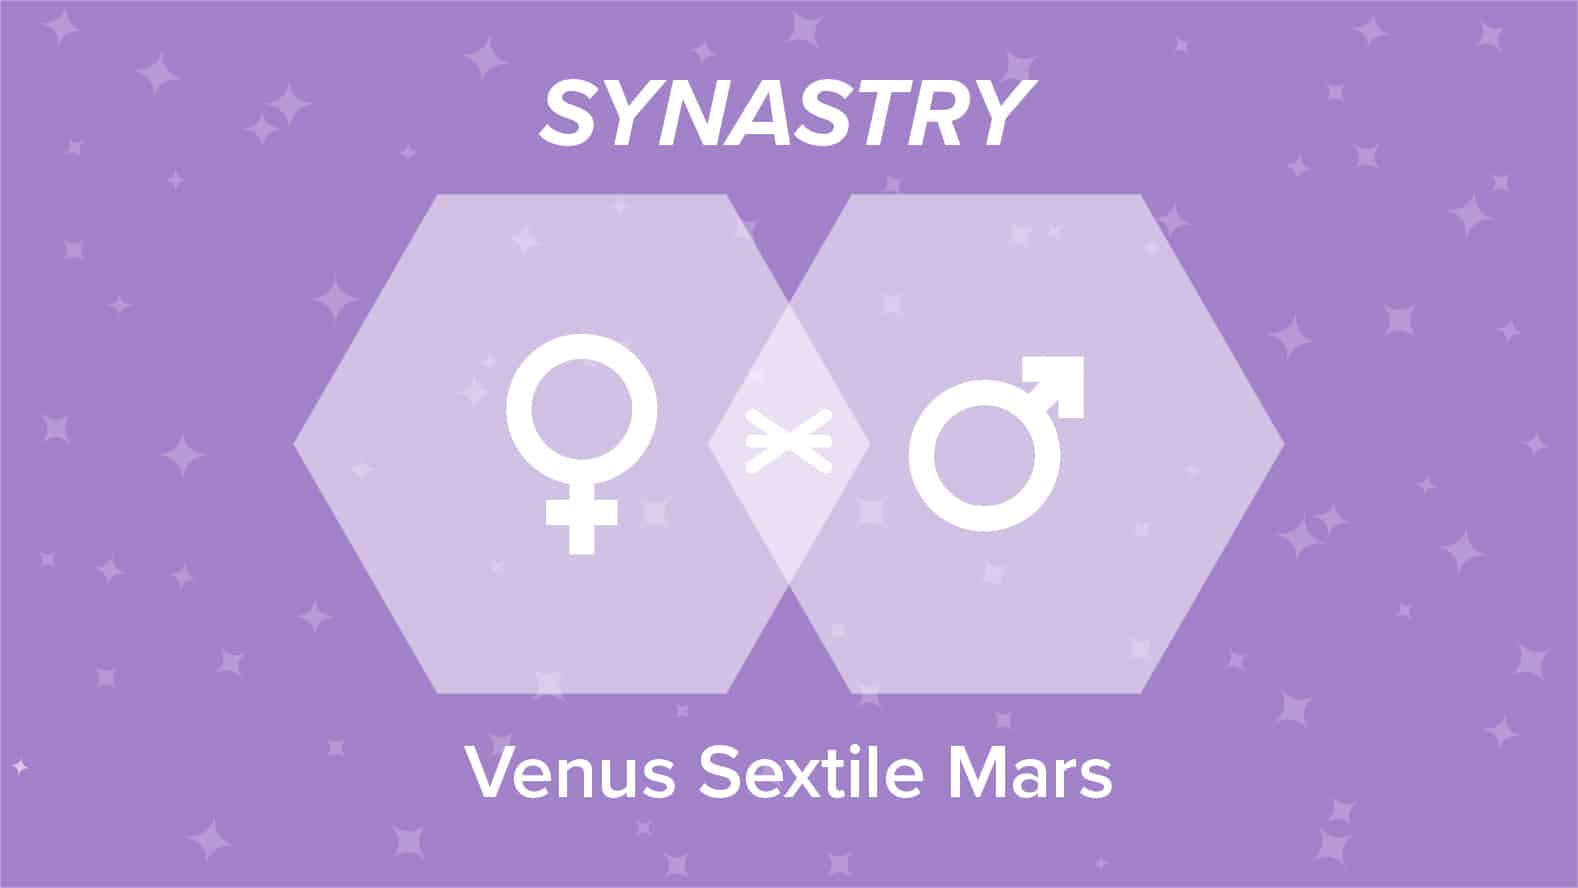 Venus Sextile Mars Synastry